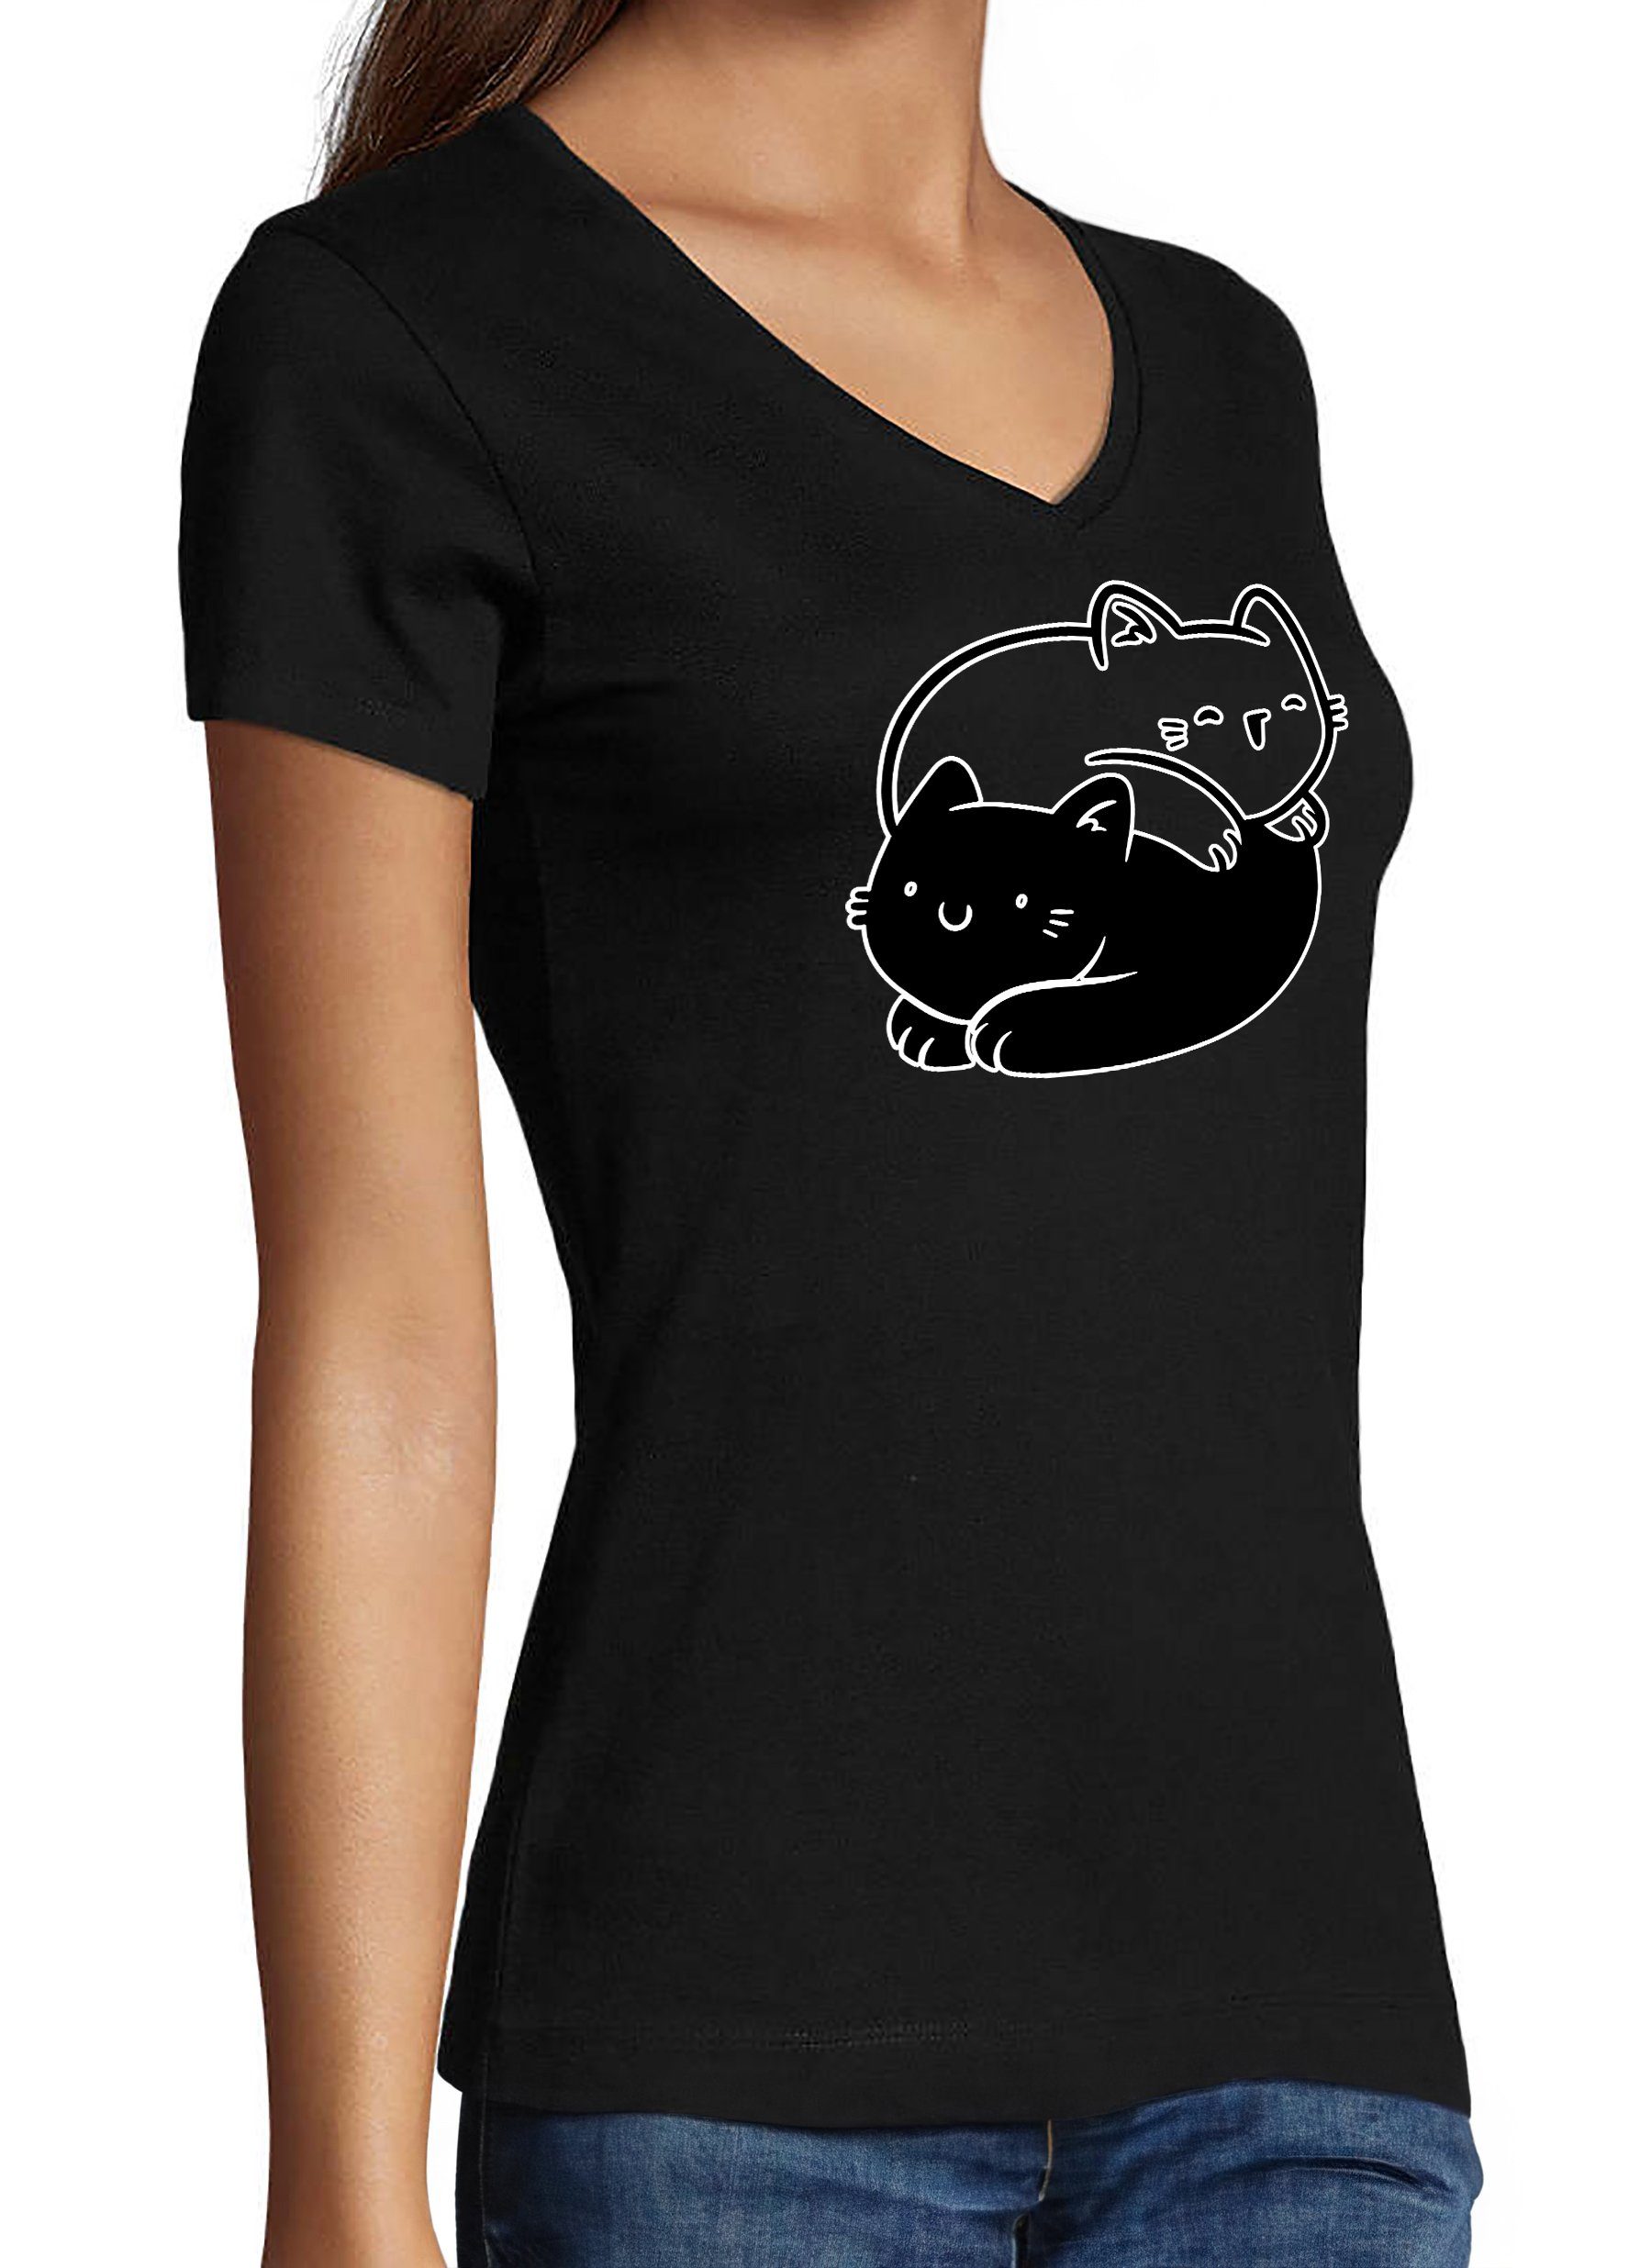 Katze i112 Yin Fit, - Baumwollshirt mit Slim bedruckt T-Shirt Aufdruck, Shirt Katzen Damen MyDesign24 Yang Print schwarz